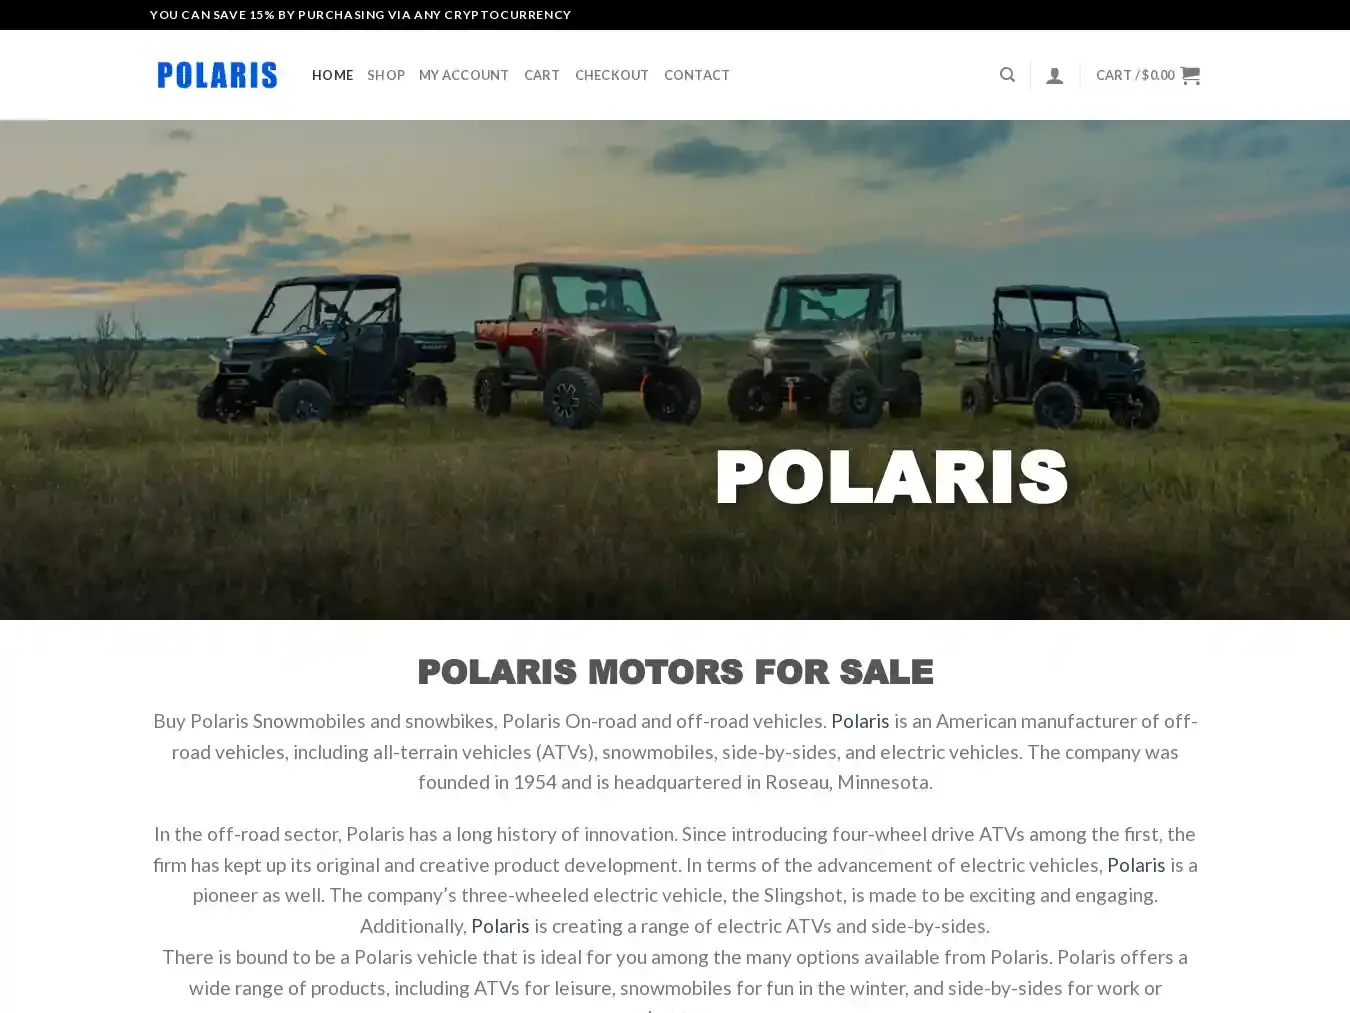 Polarisusashop.com Fraudulent Automobile website.